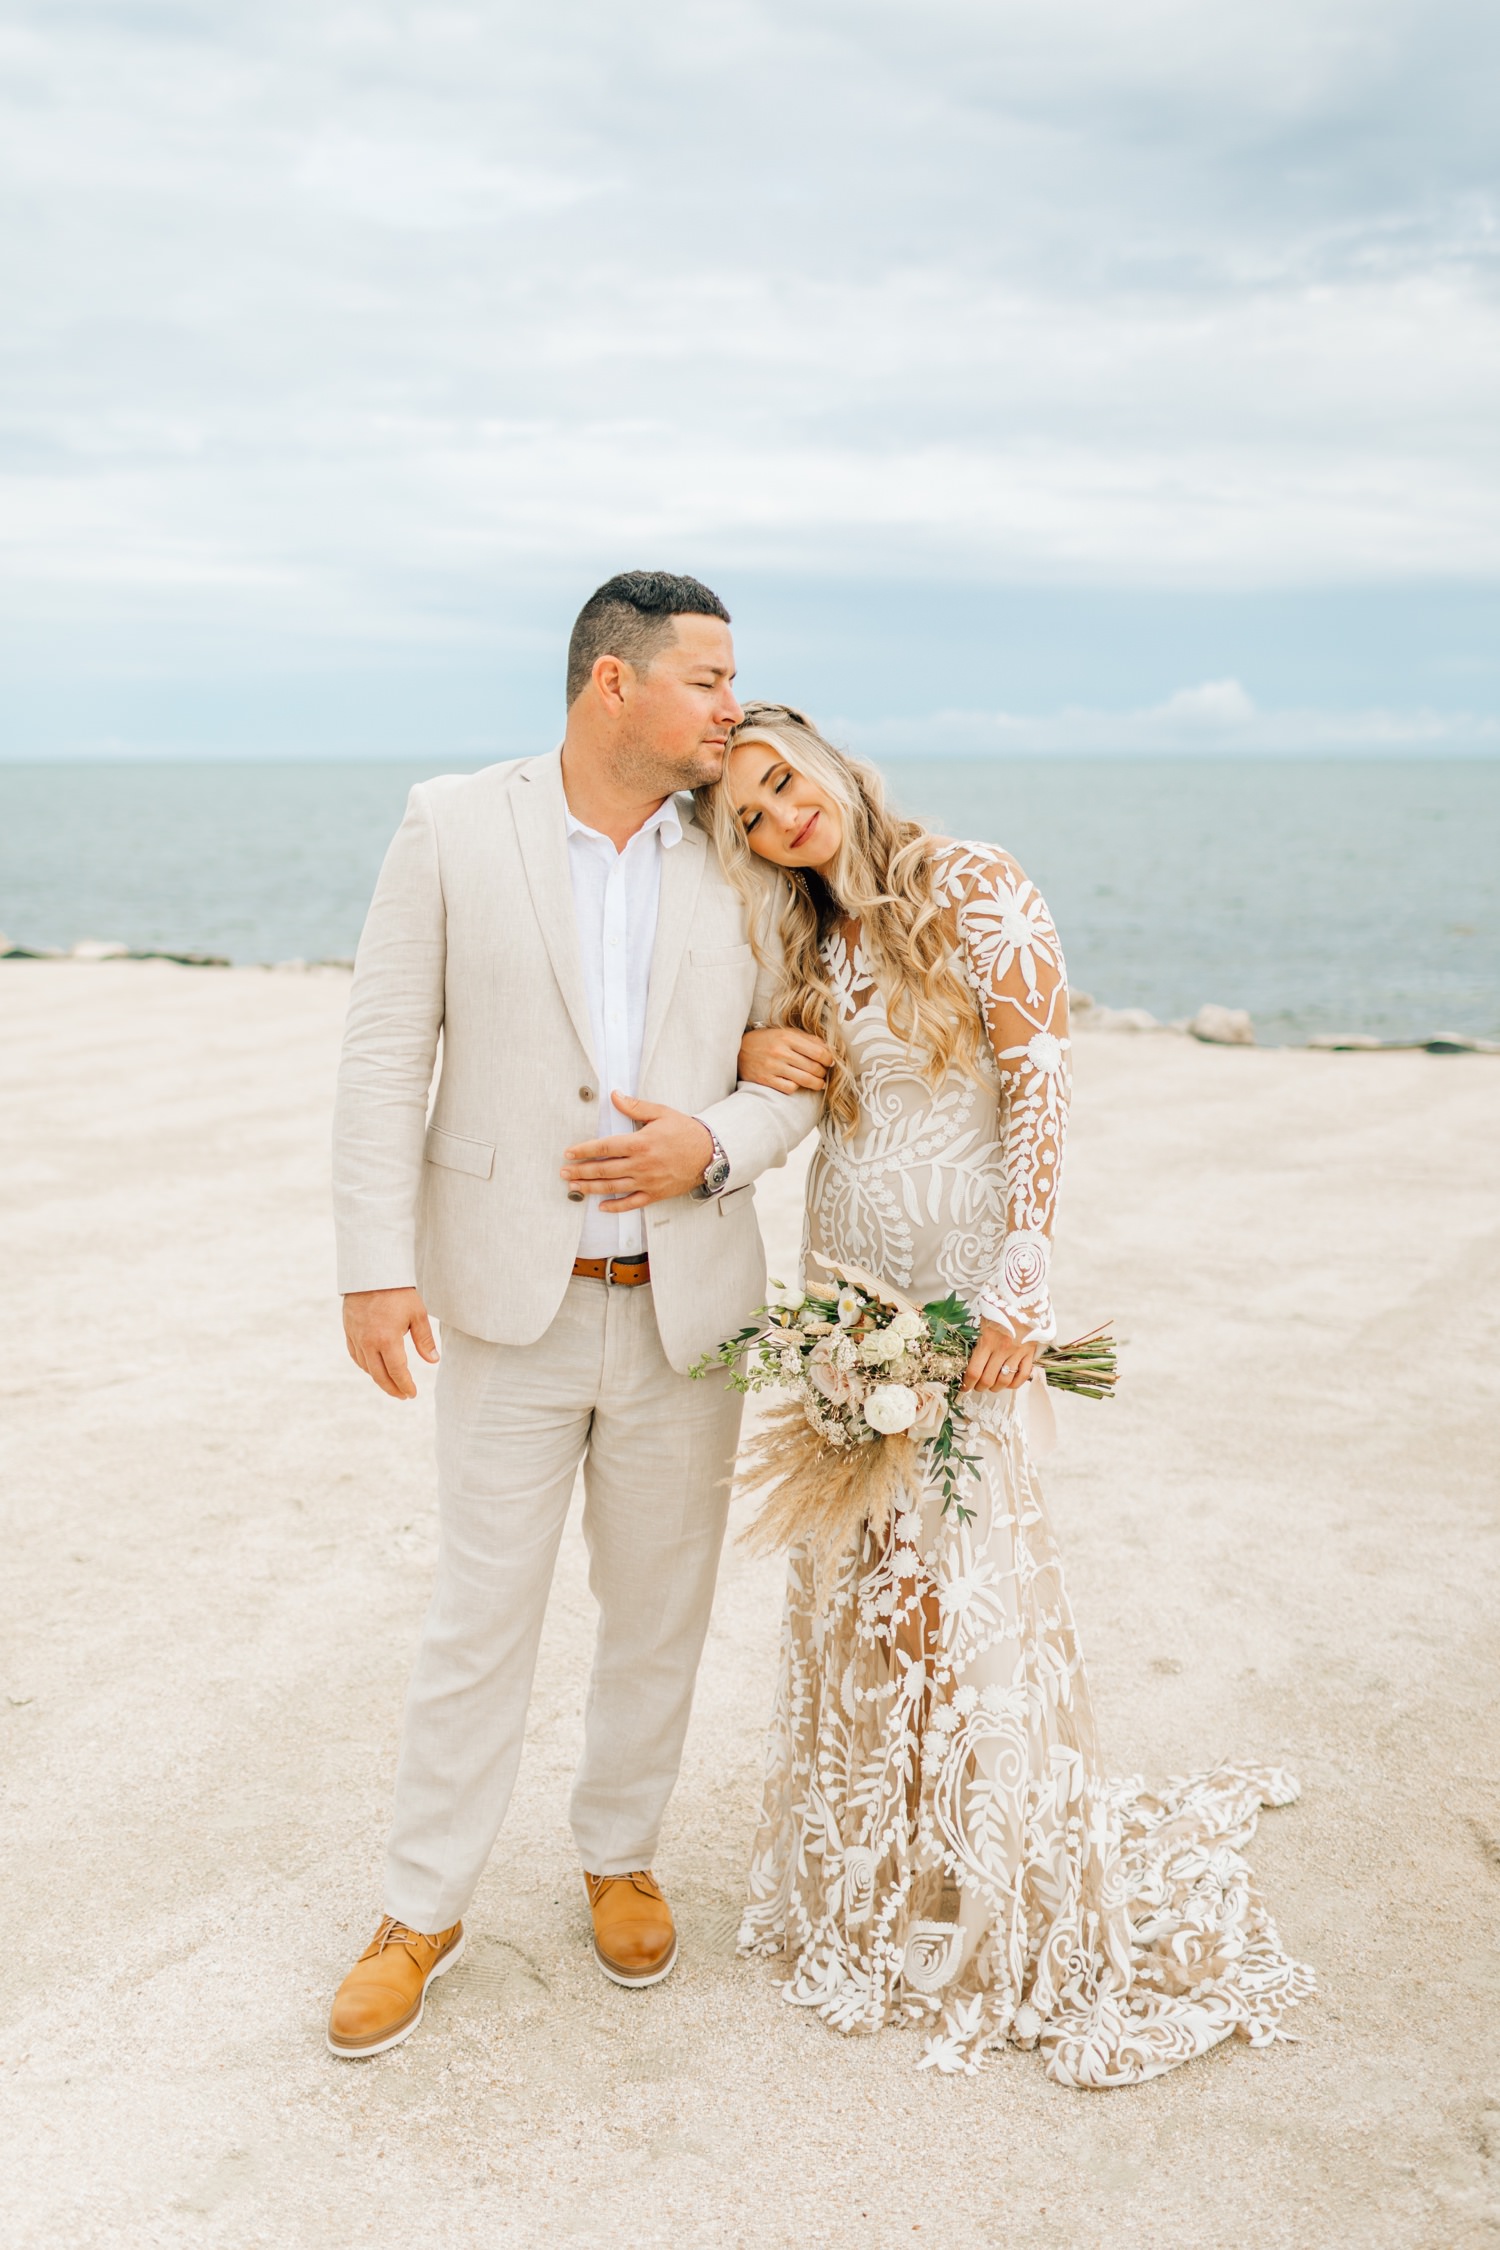 Wedding photography at The Islander Resort in Islamorada Florida Keys by Finding Light Photography